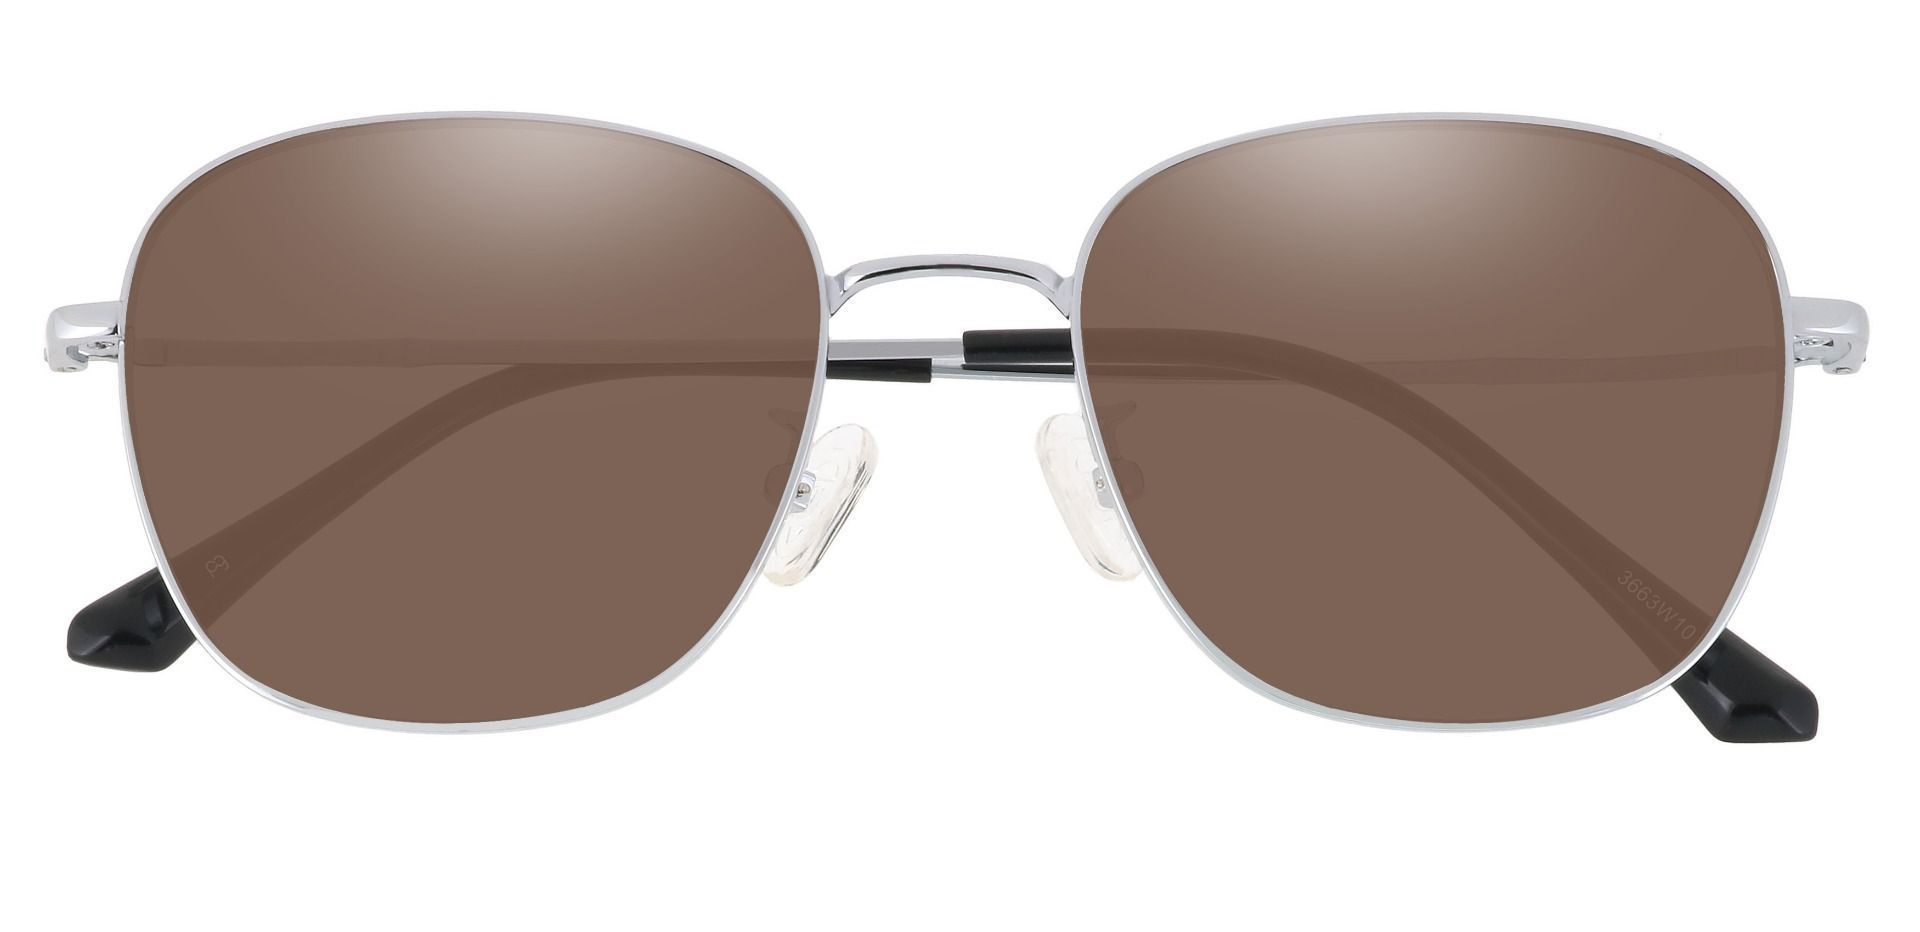 Fresno Square Prescription Sunglasses - Silver Frame With Brown Lenses